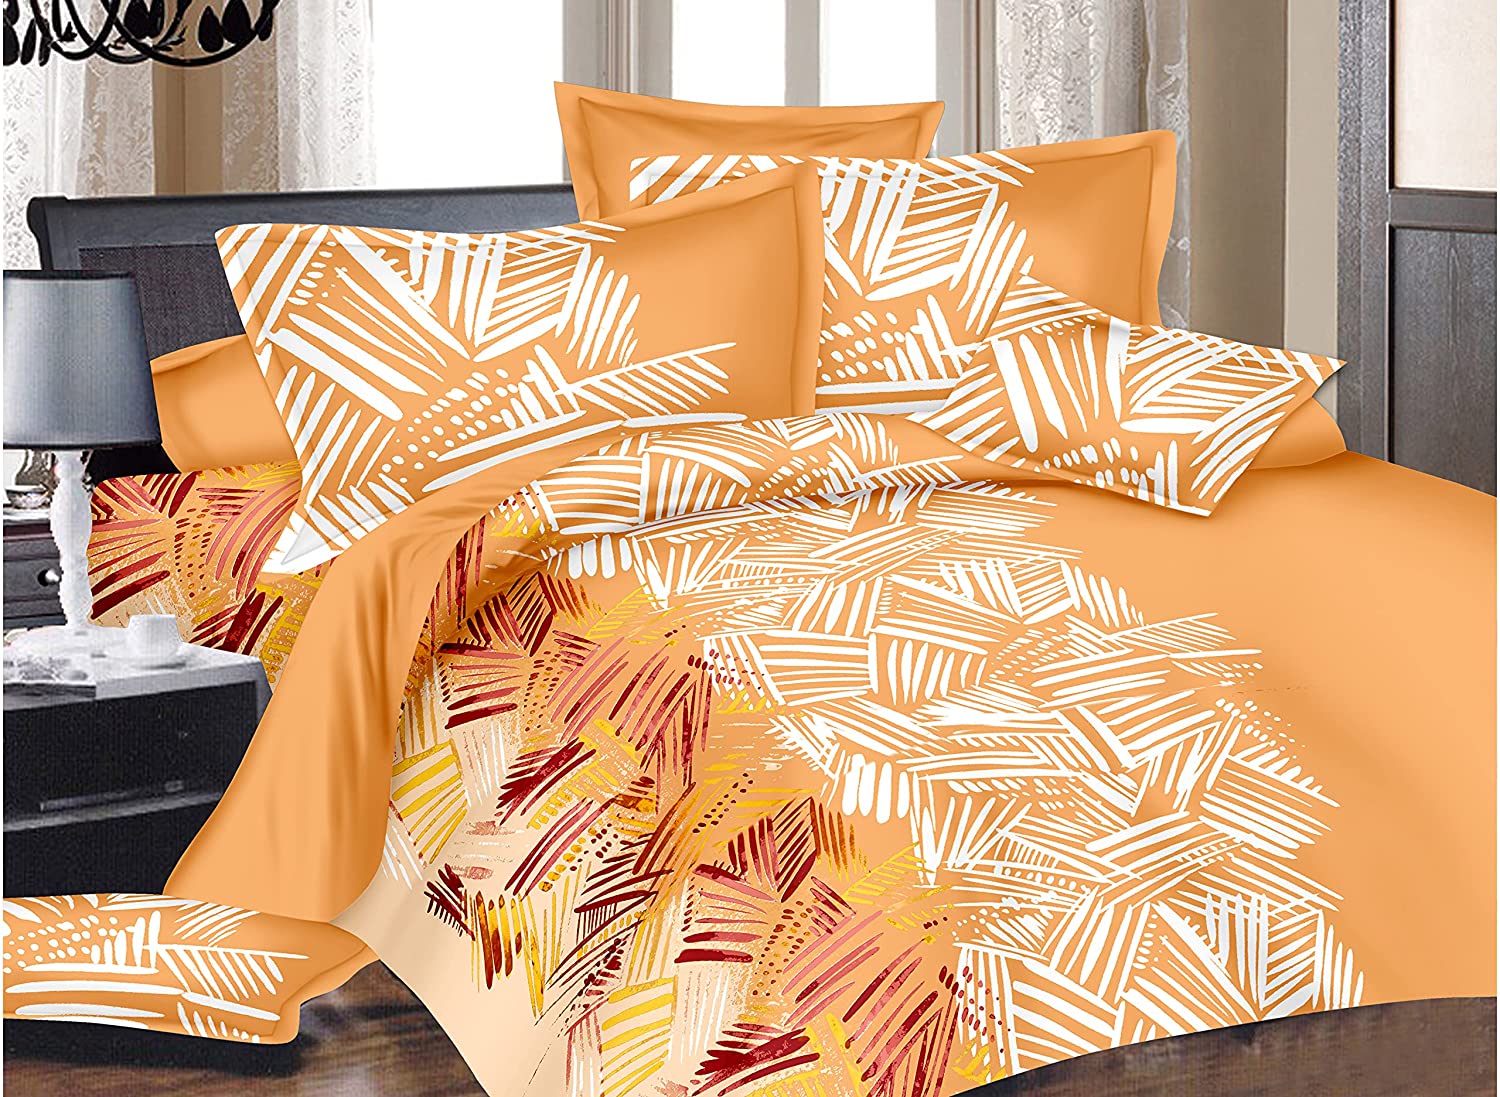 Sleeping Owls Satiny Printed 100% Soft Cotton 210 Tc Super King Bedsheet with 2Pc Pillow Cover-274 cm X 274 cm - S-108 (Faint Orange)